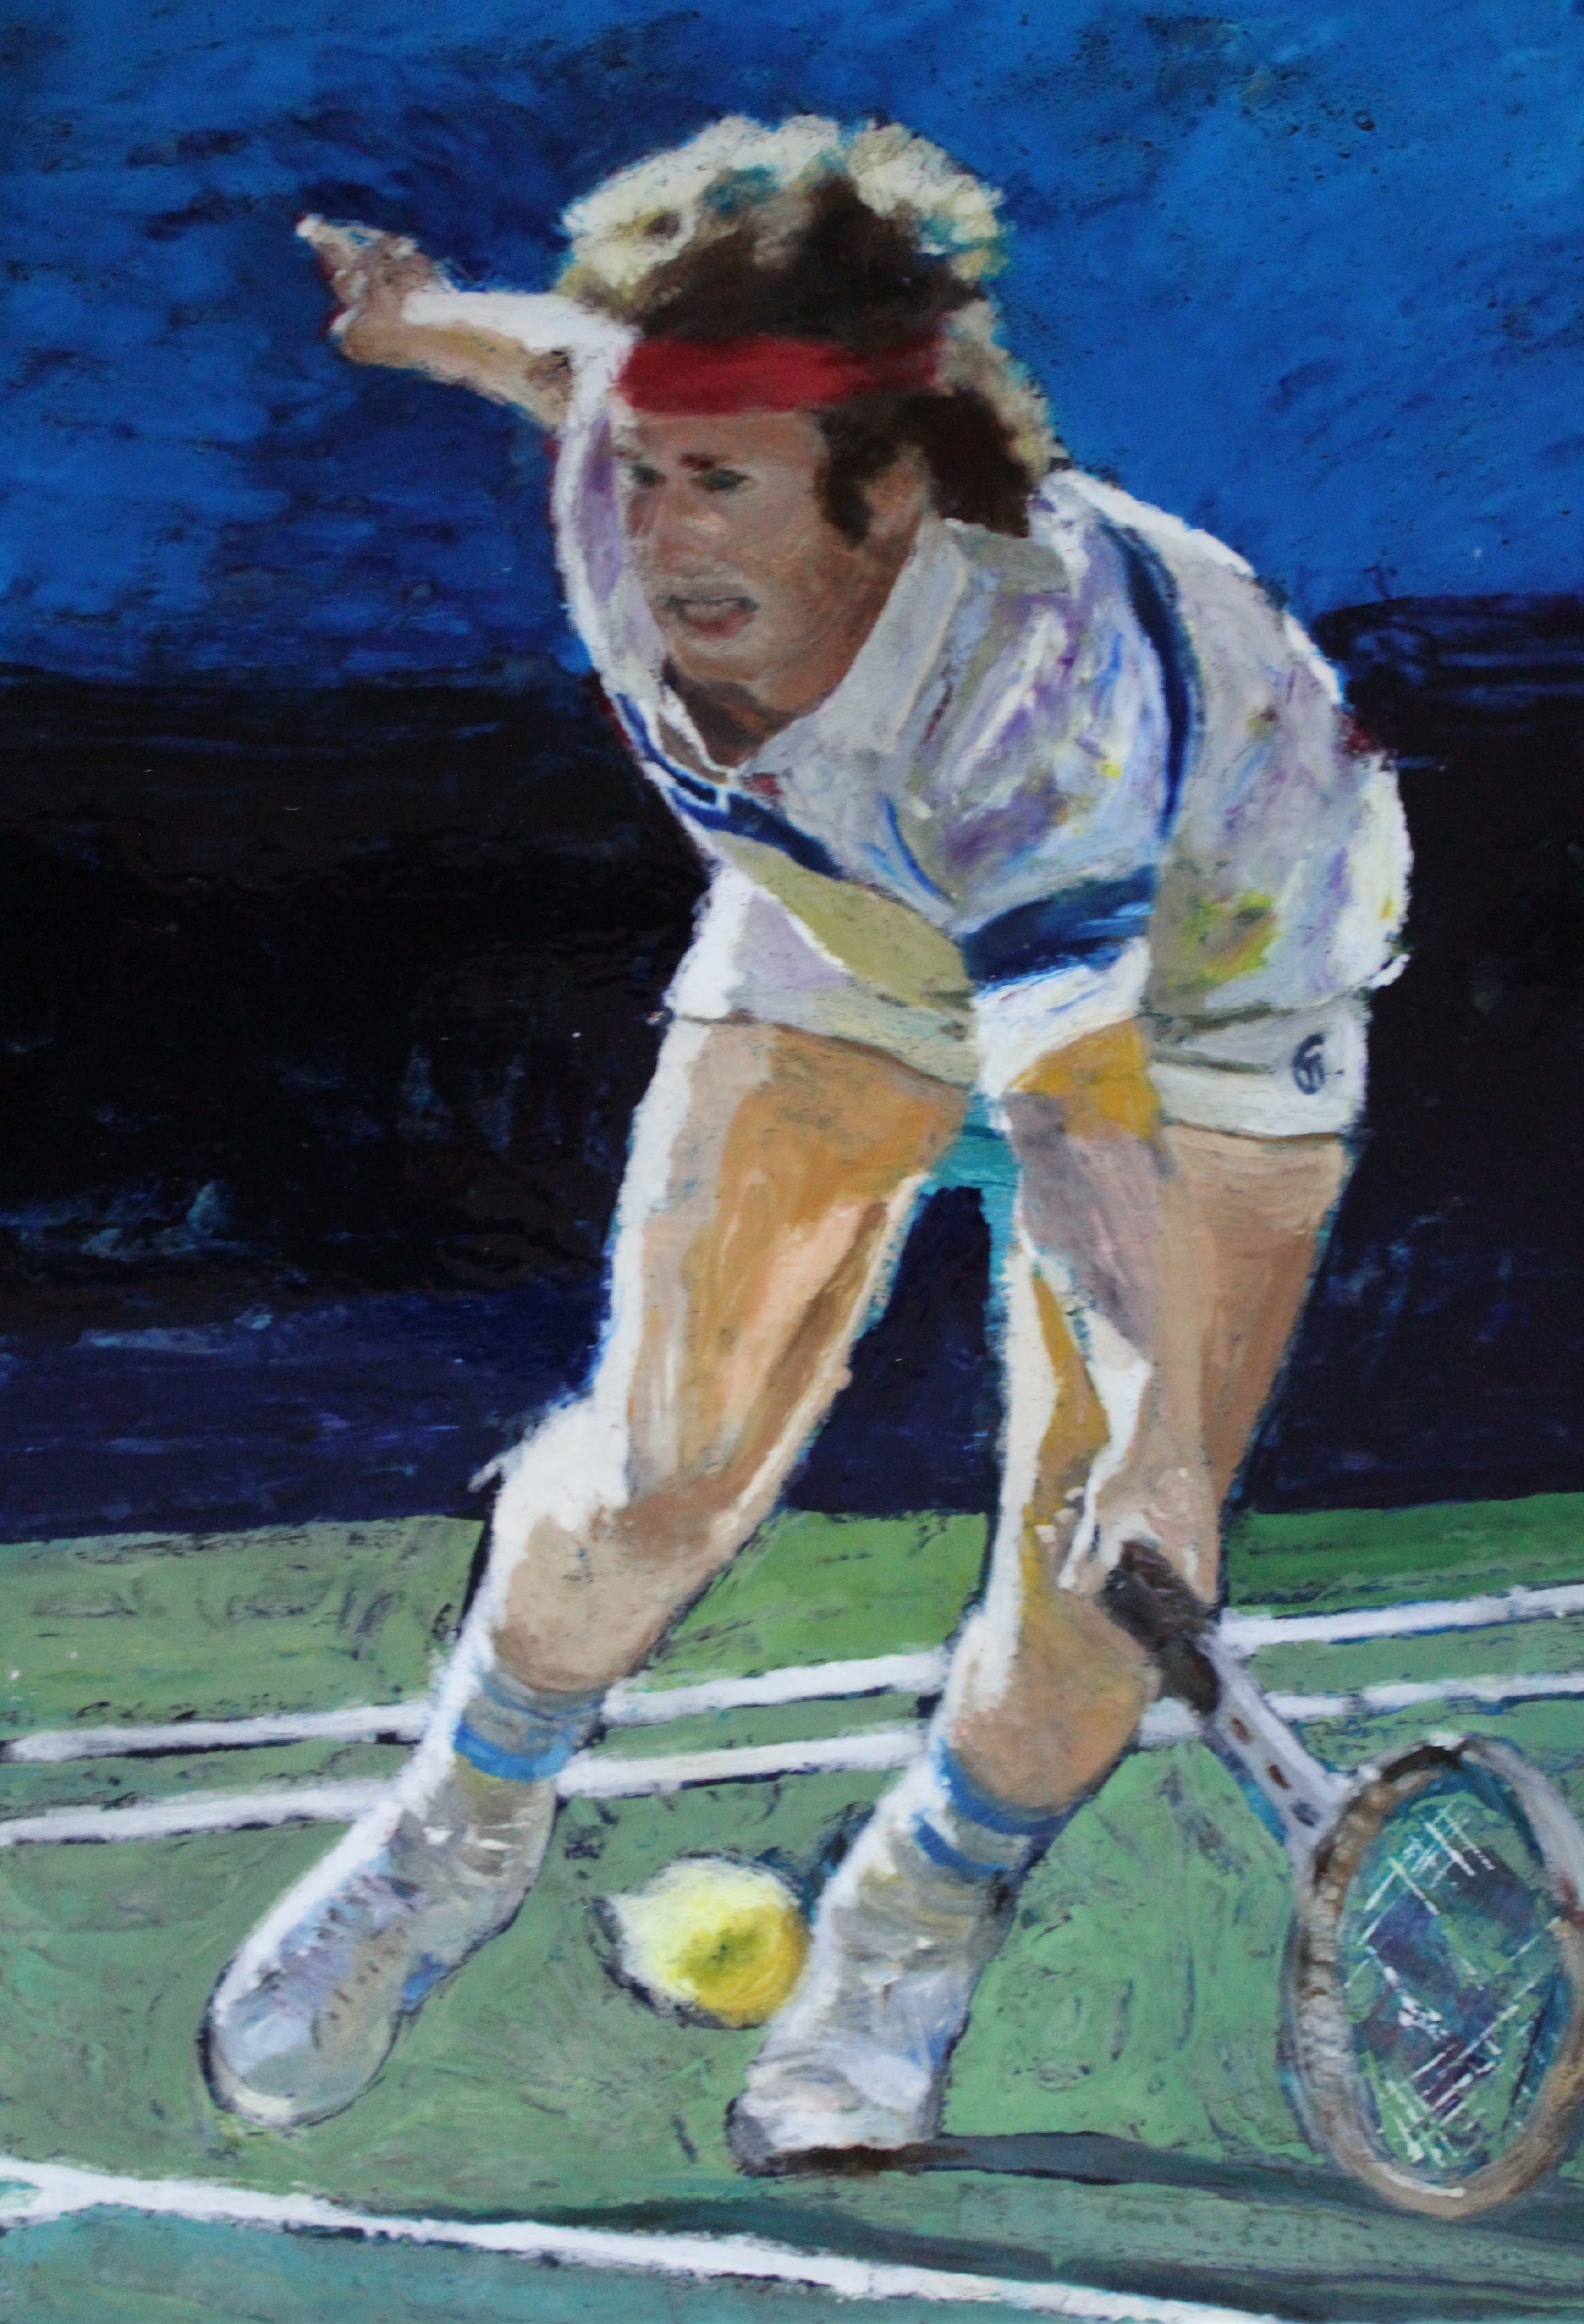 Johnny Mac, 1980 US Open Champion